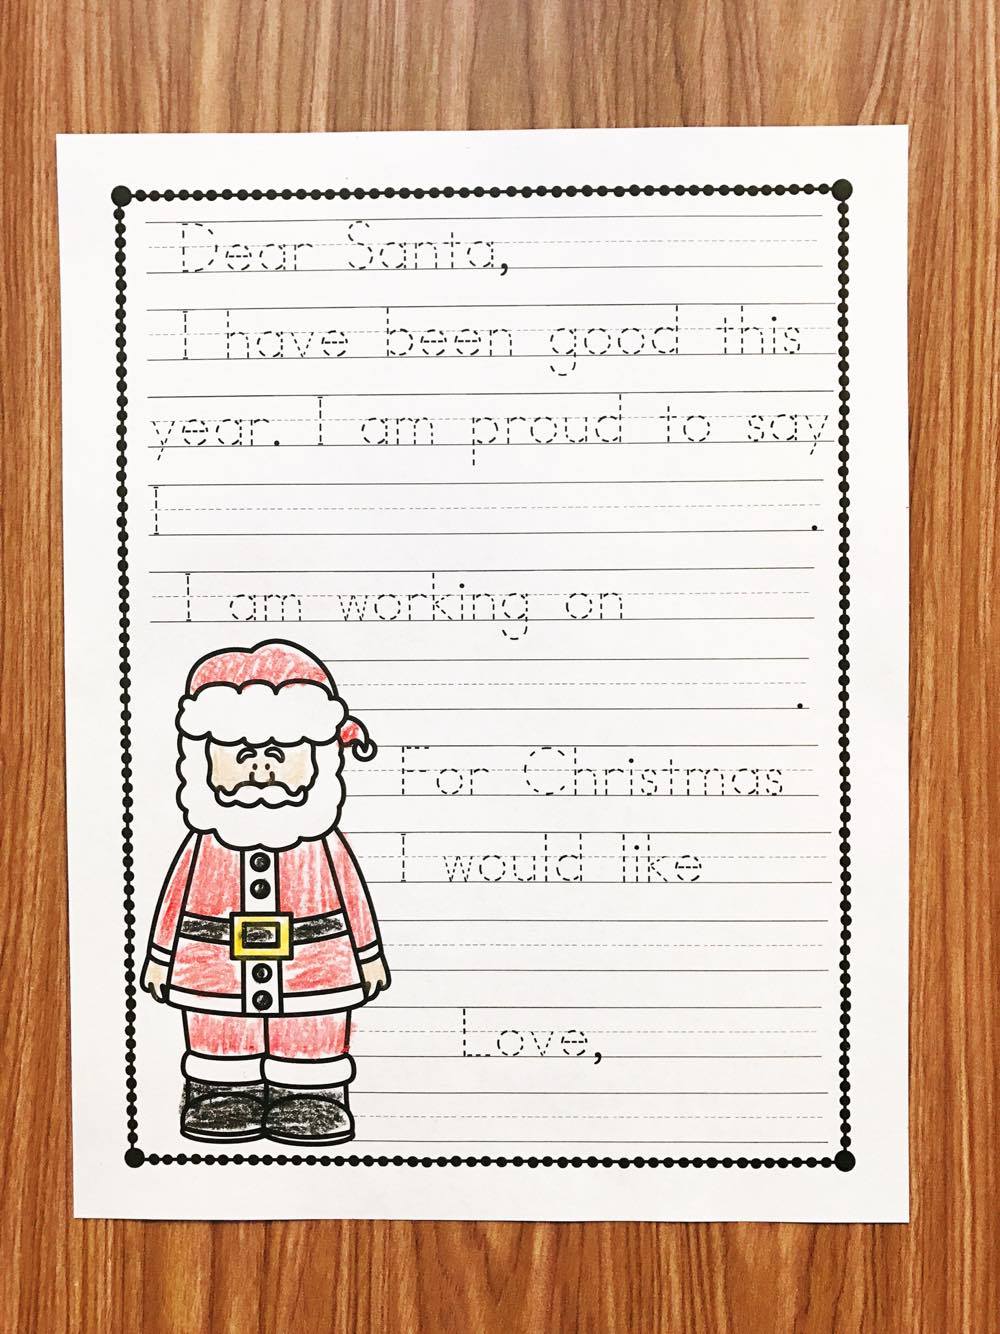 Free letter to Santa 